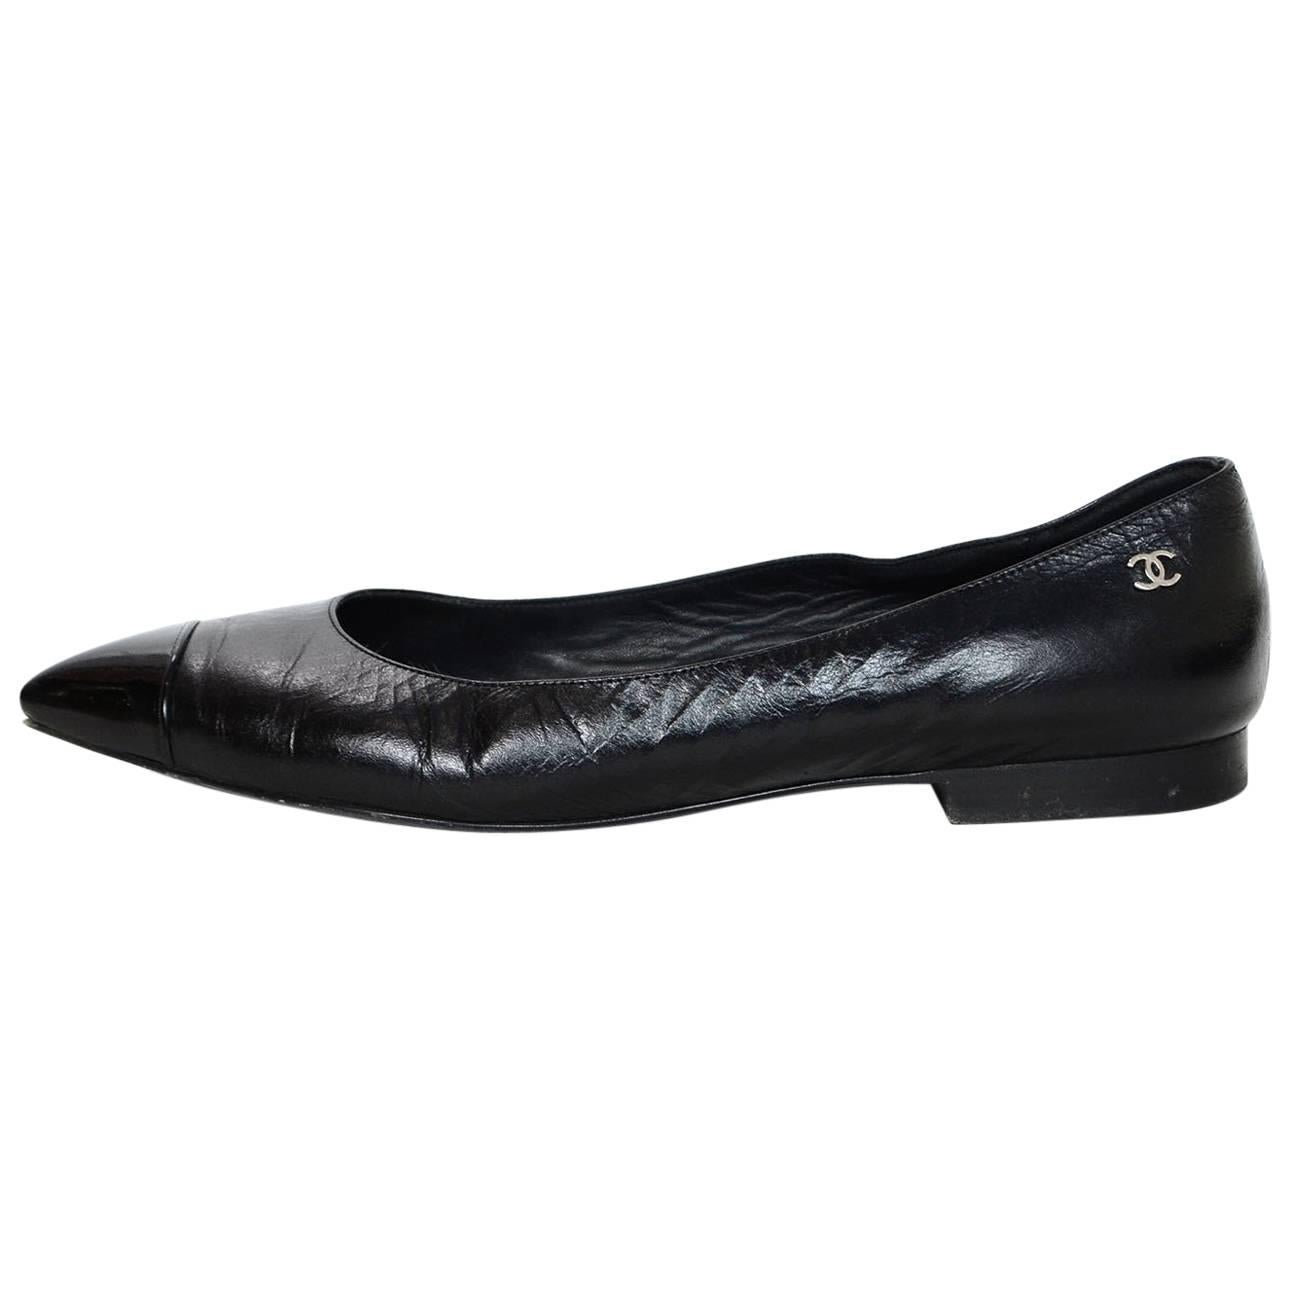 Chanel Black Leather & Patent Cap-Toe Flats Sz 40.5